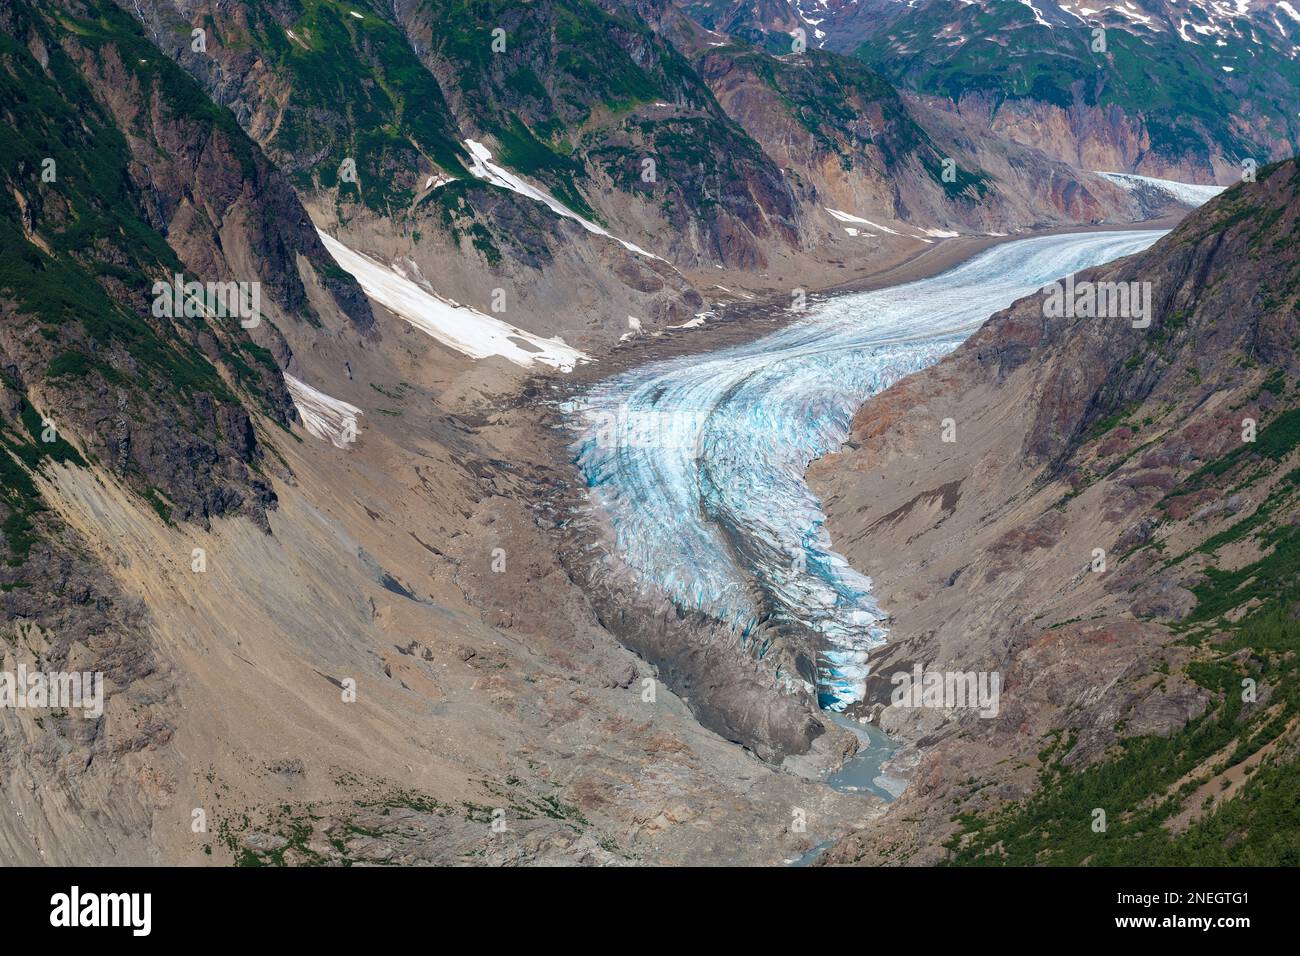 Lengua glaciar en un valle erosionado del glaciar Salmon, Columbia Británica, Canadá. Foto de stock